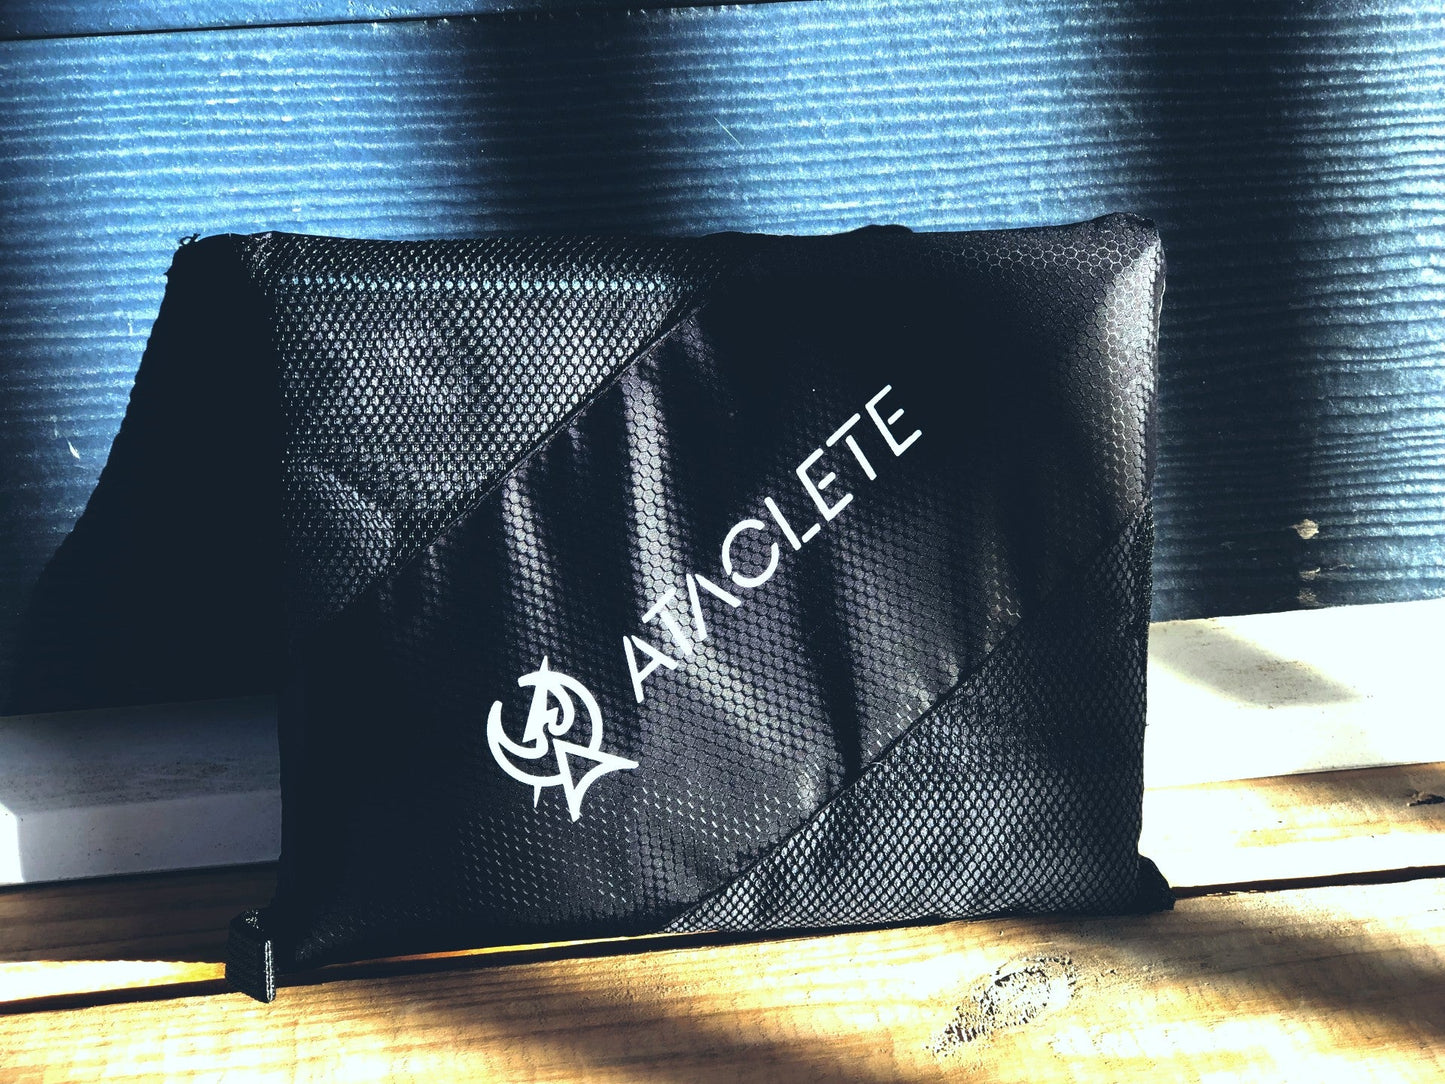 Tac-Dri Advanced Fiber Full-Sized Body Towel by ATACLETE